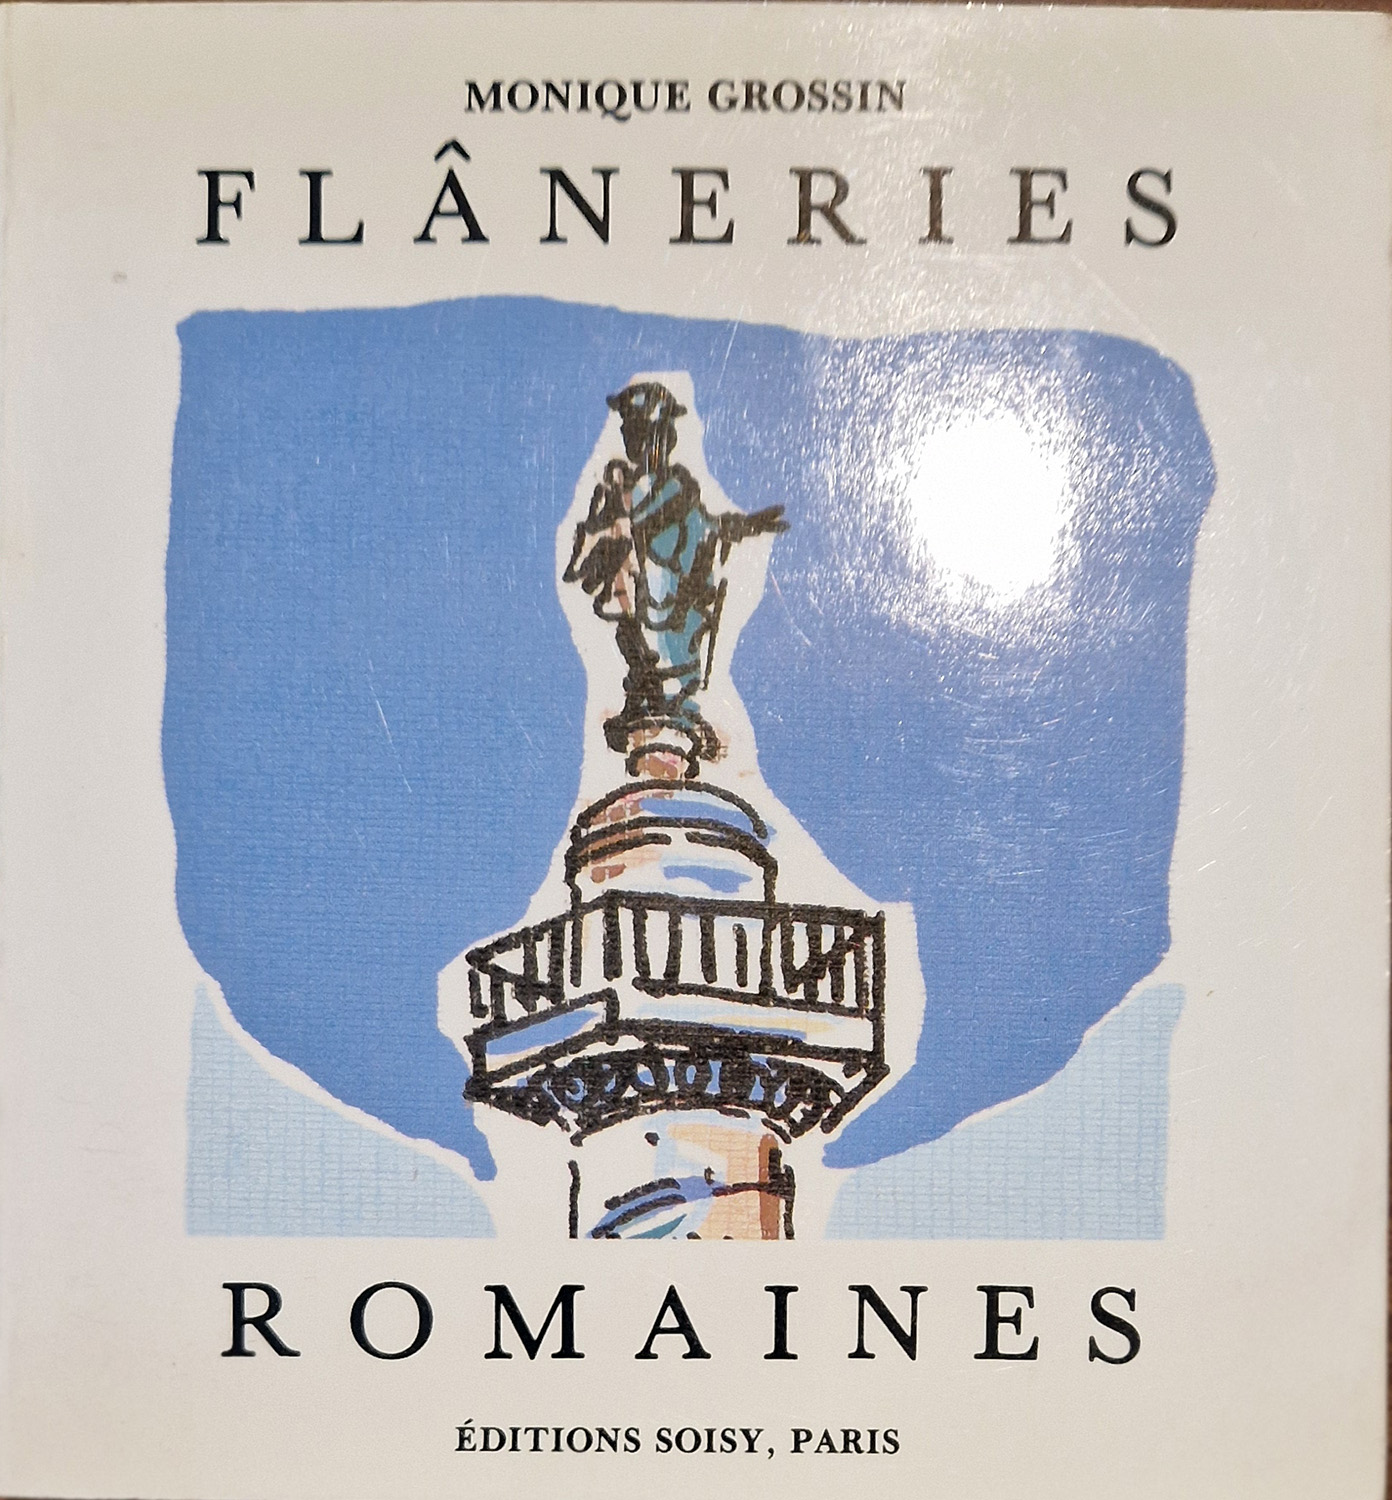 Flaneries romaines.